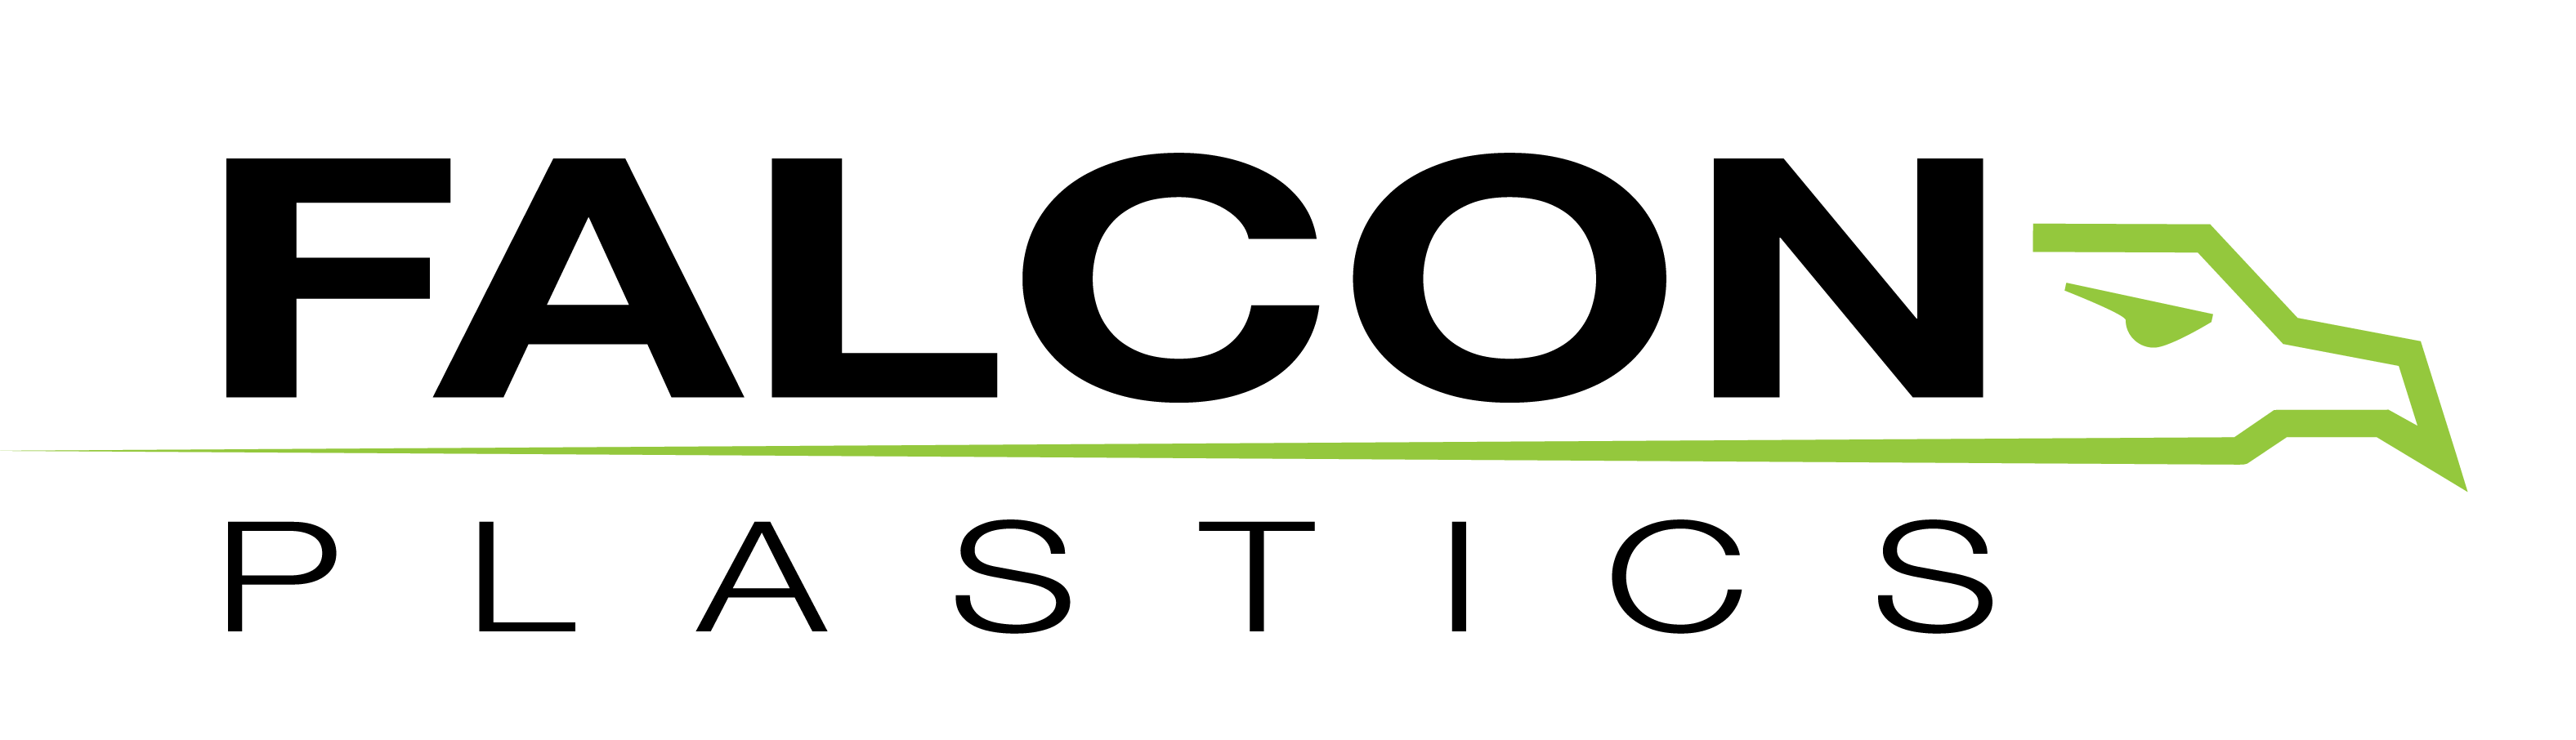 Falcon Plastics logo